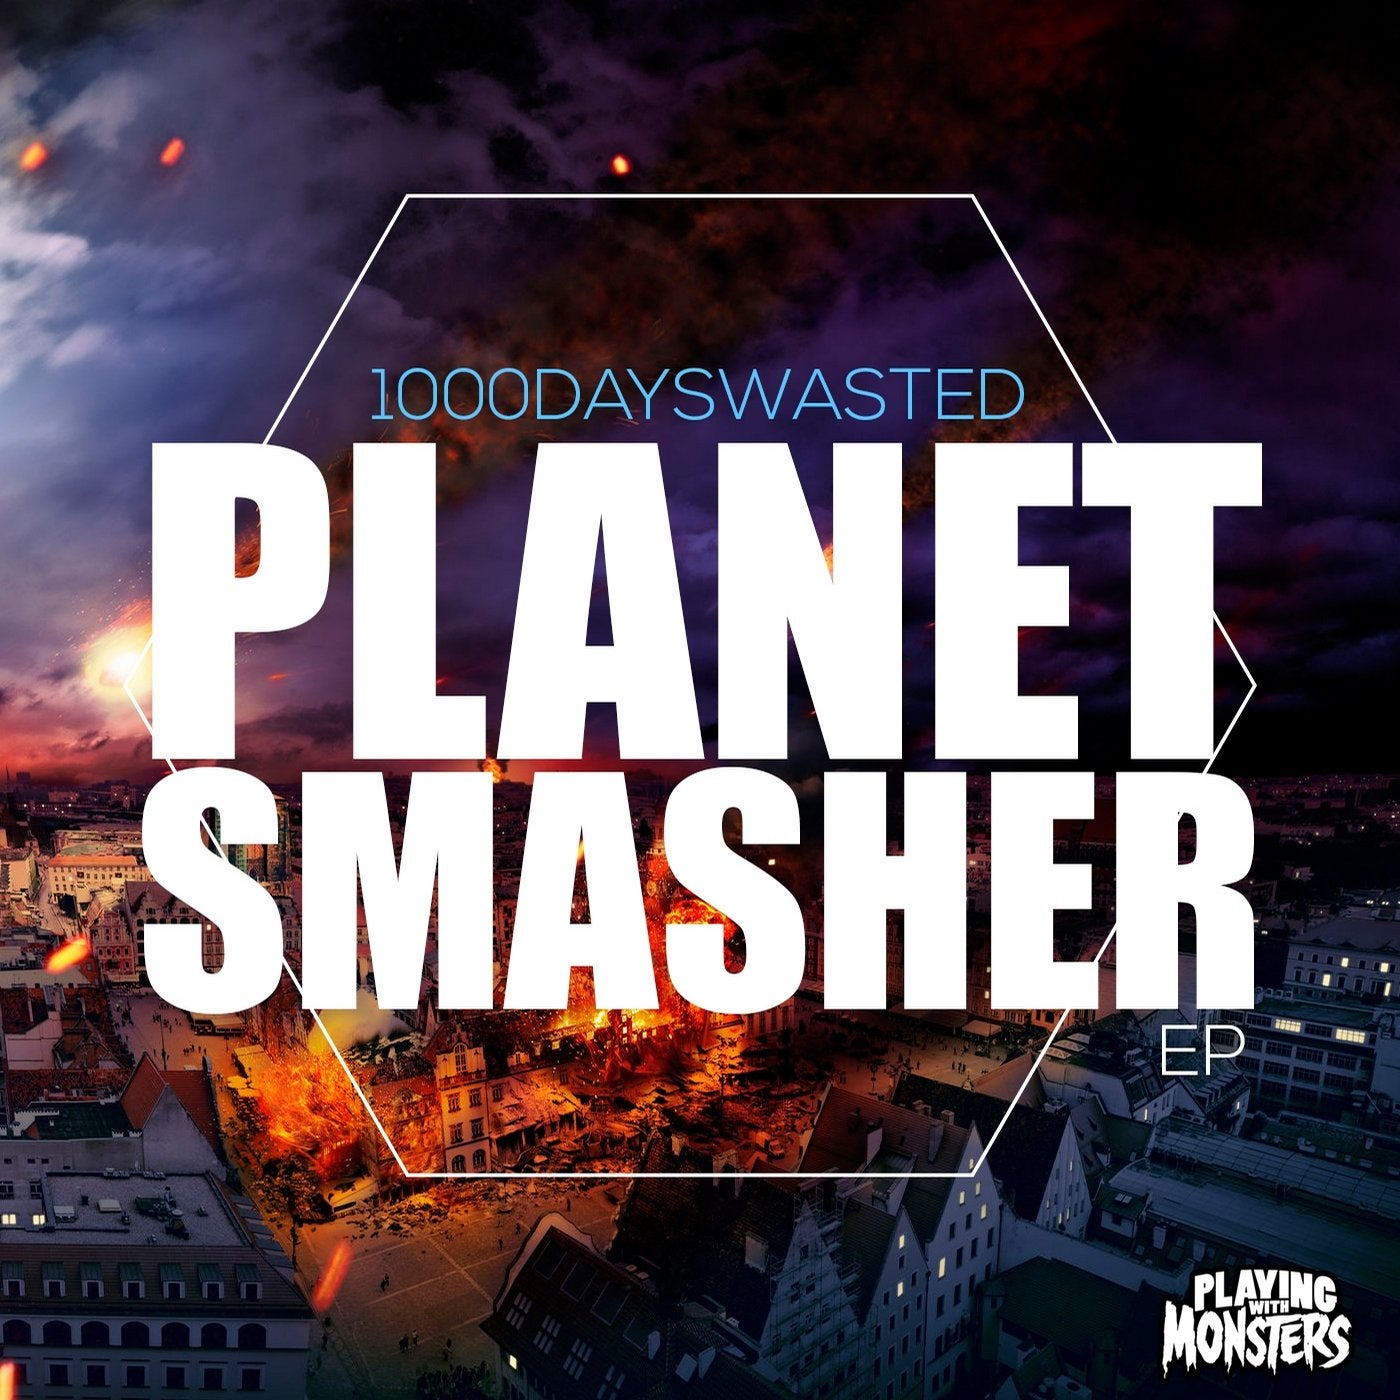 Planet Smasher EP